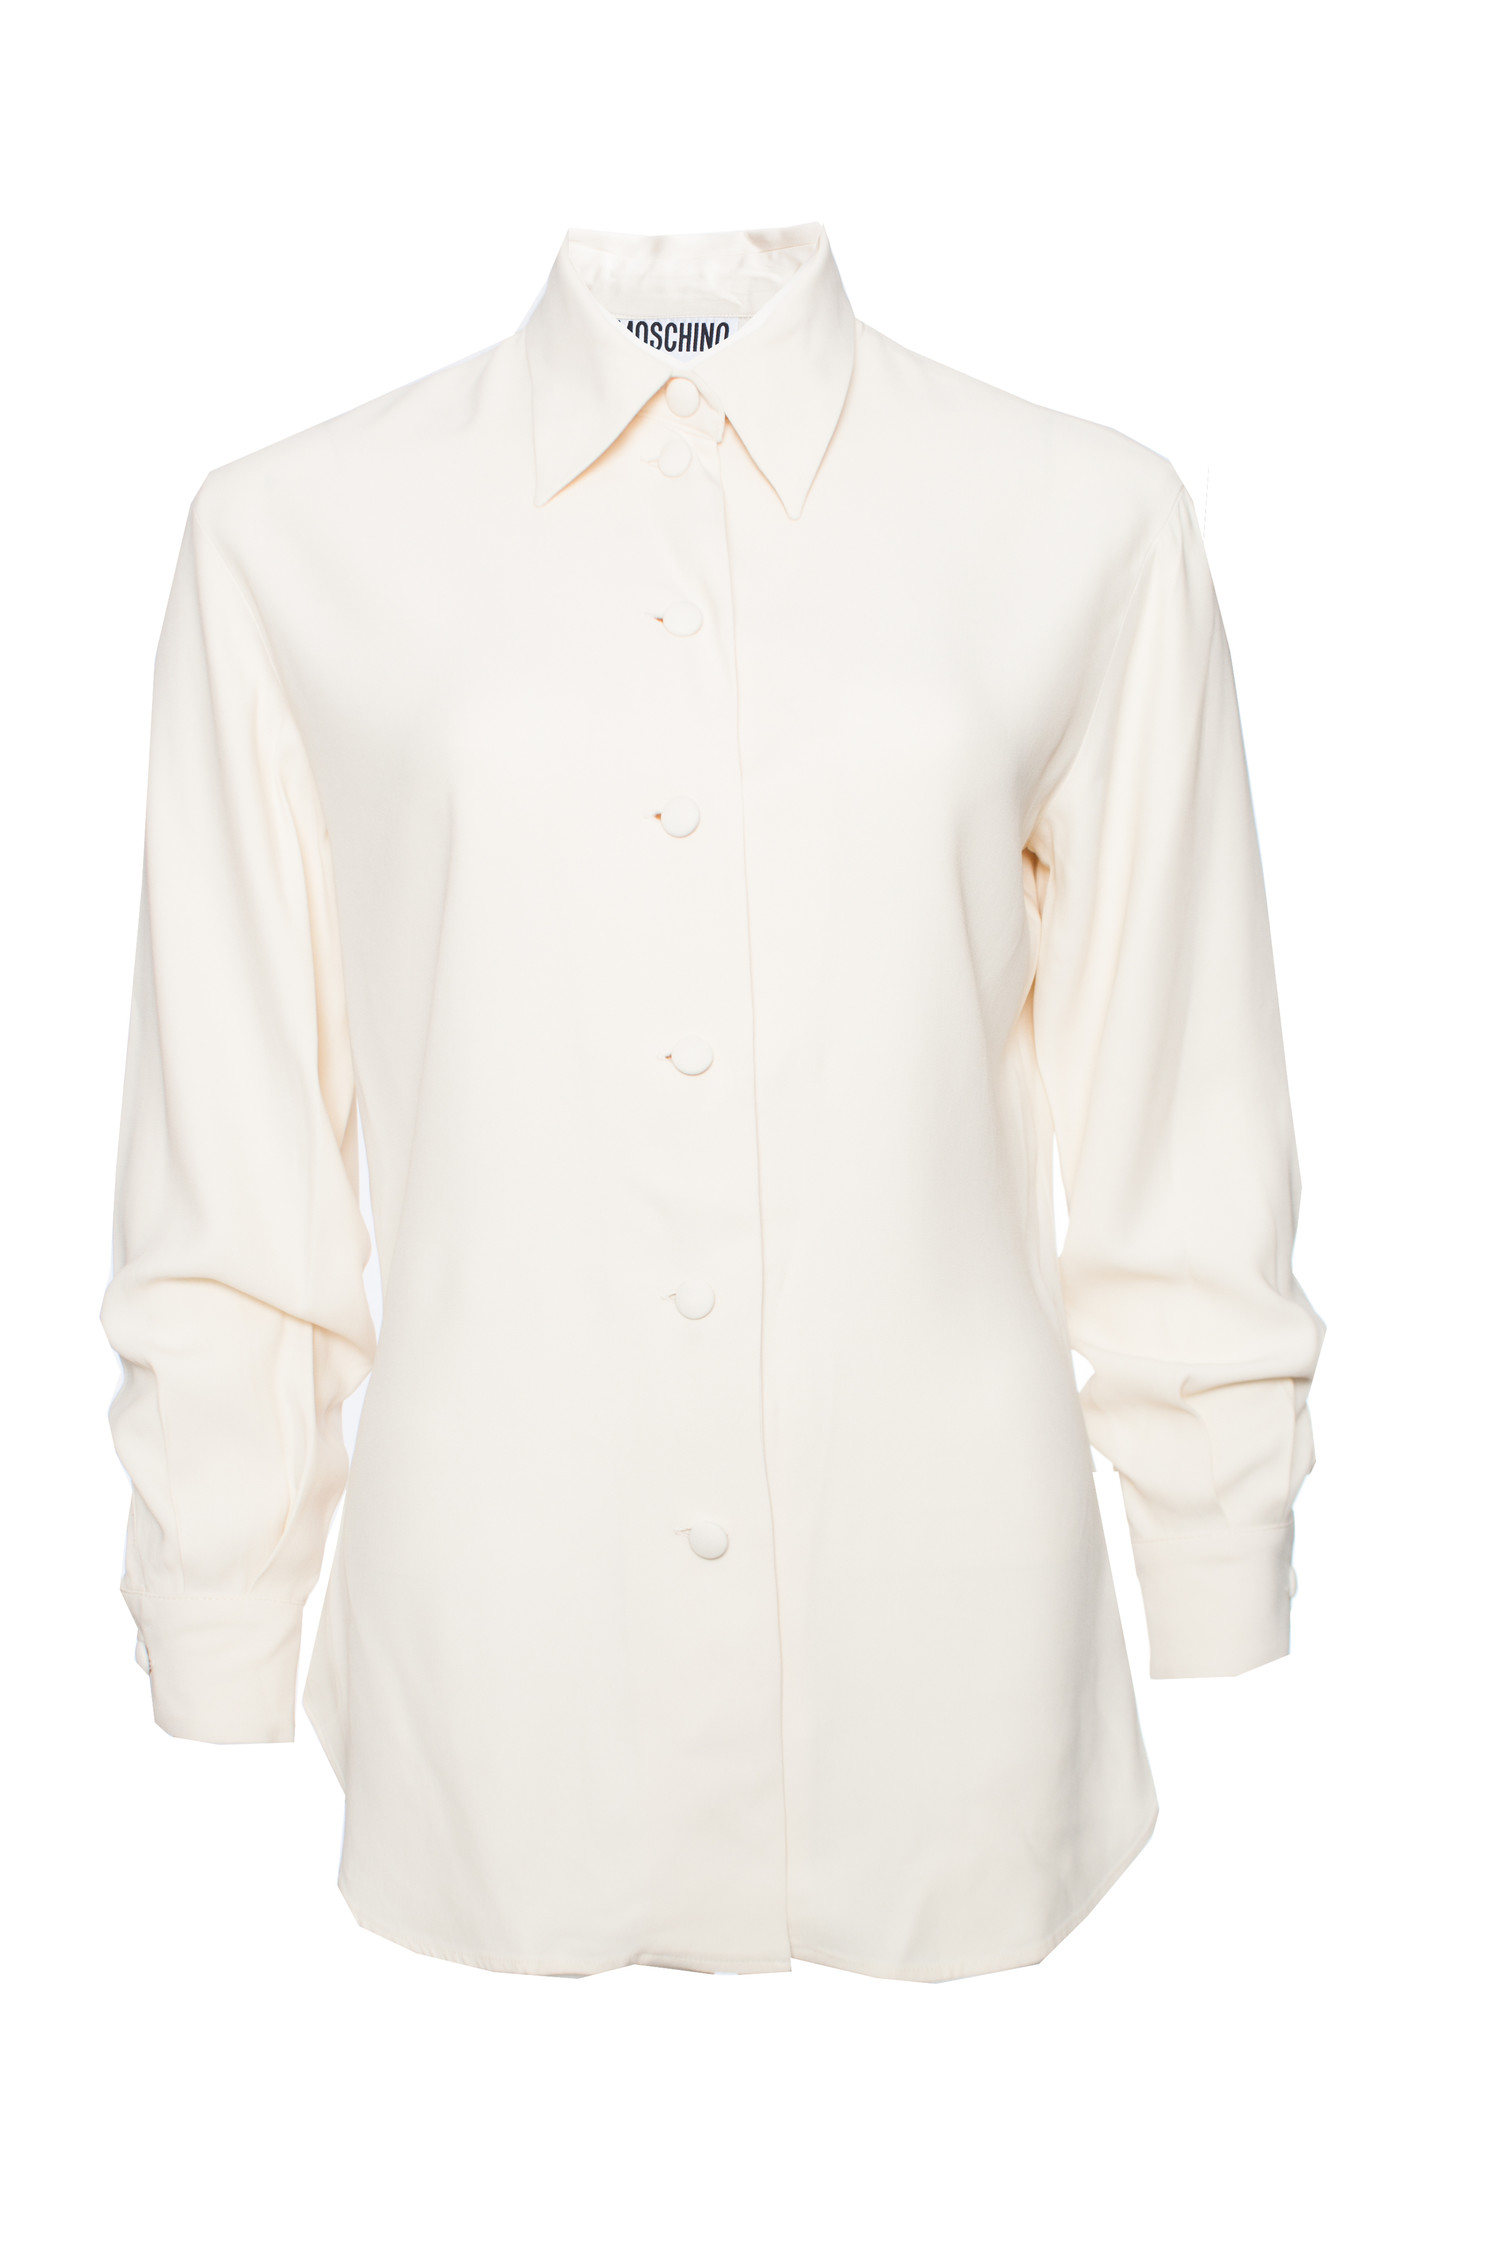 Moschino Couture, Vintage Cream-colored blouse. - Unique Designer Pieces